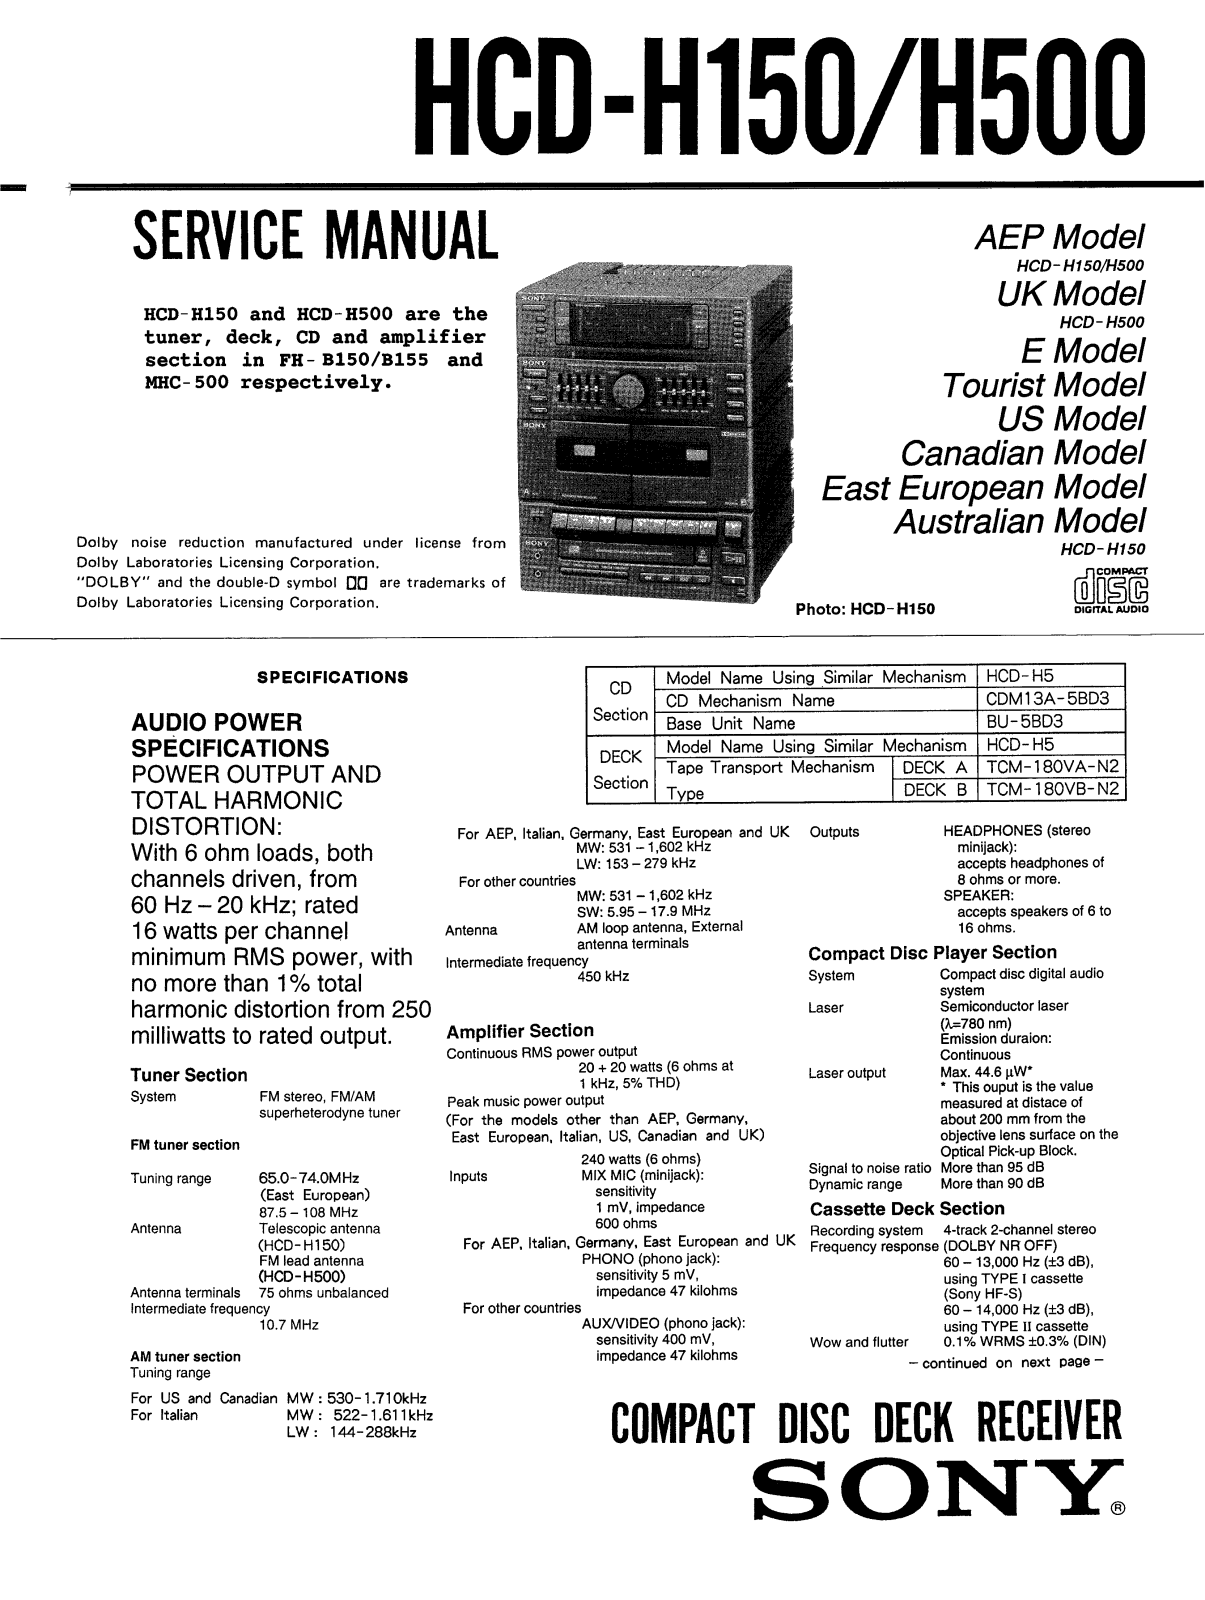 Sony HCDH-150 Service manual